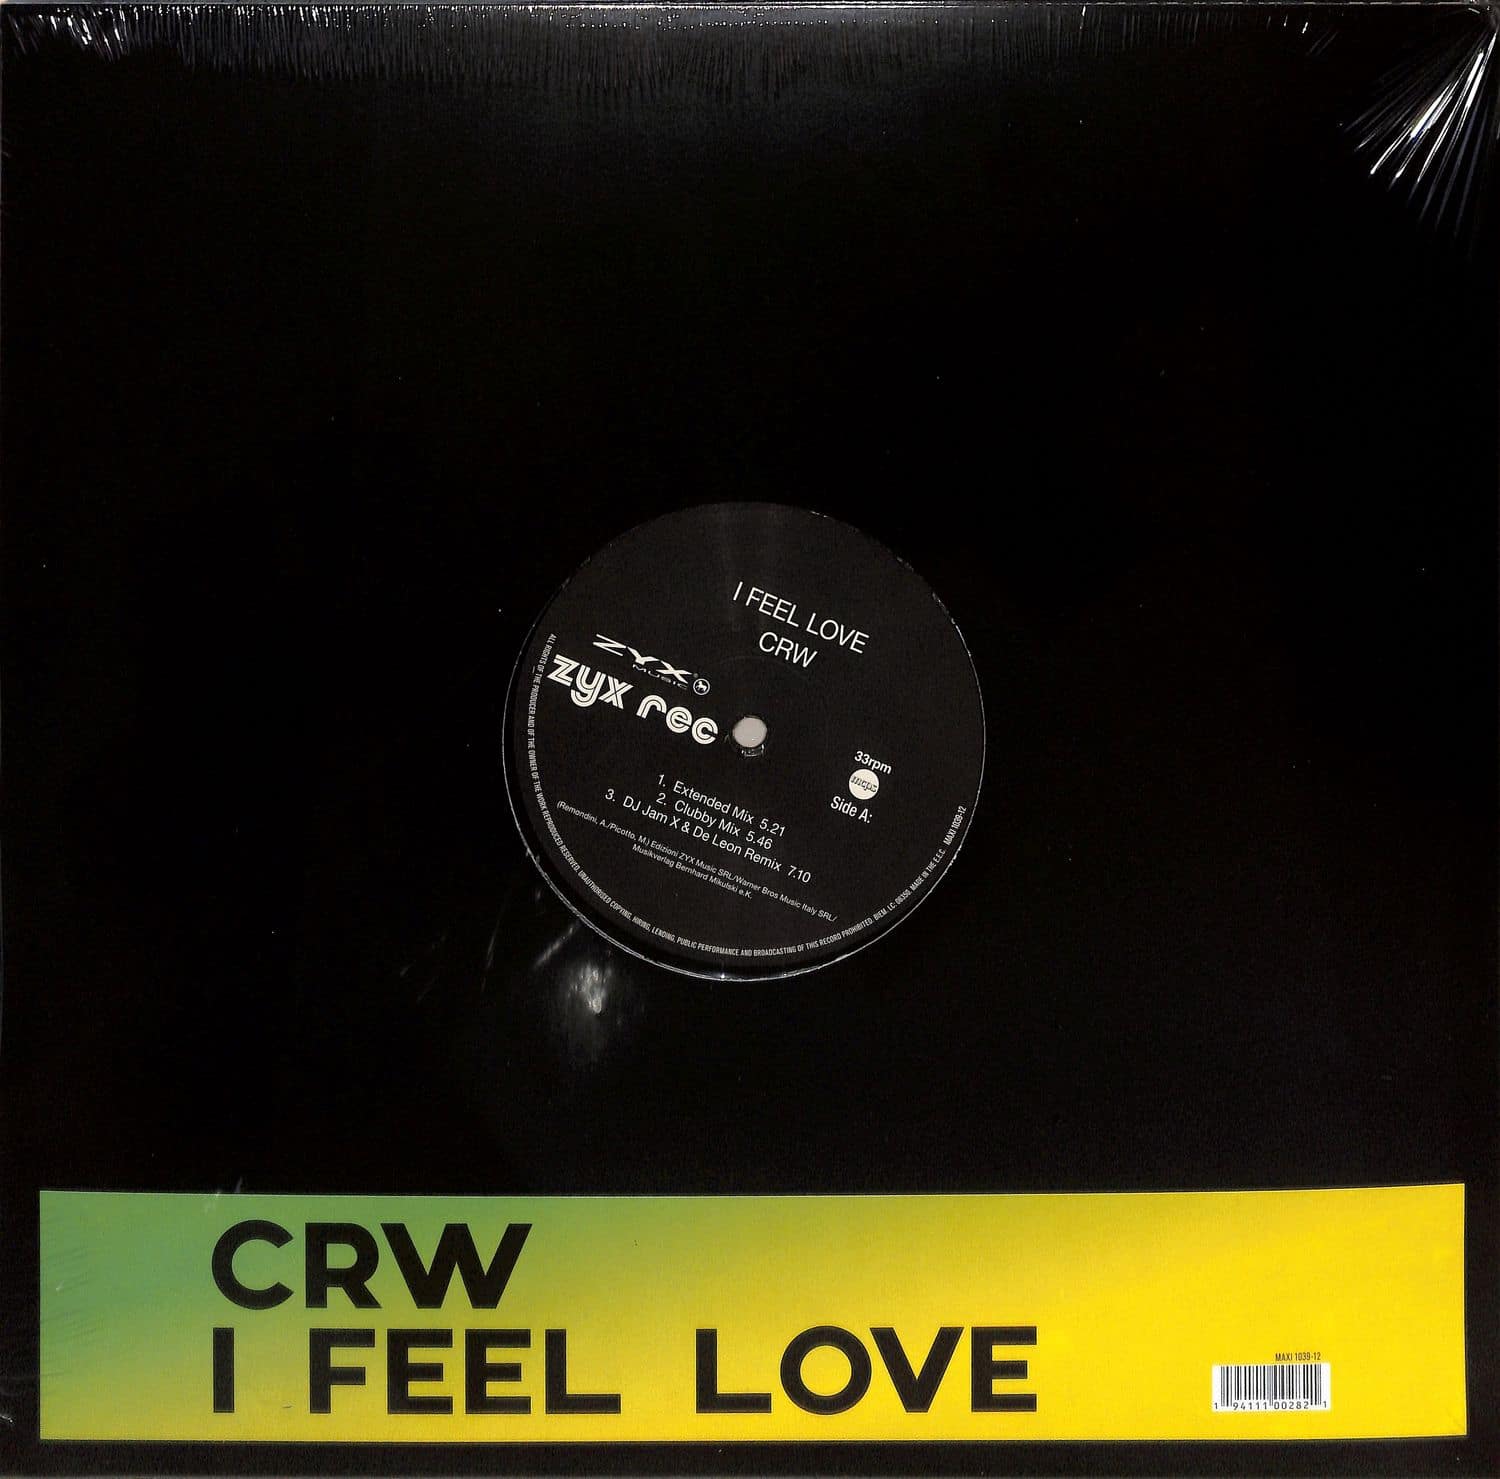 CRW - I FEEL LOVE